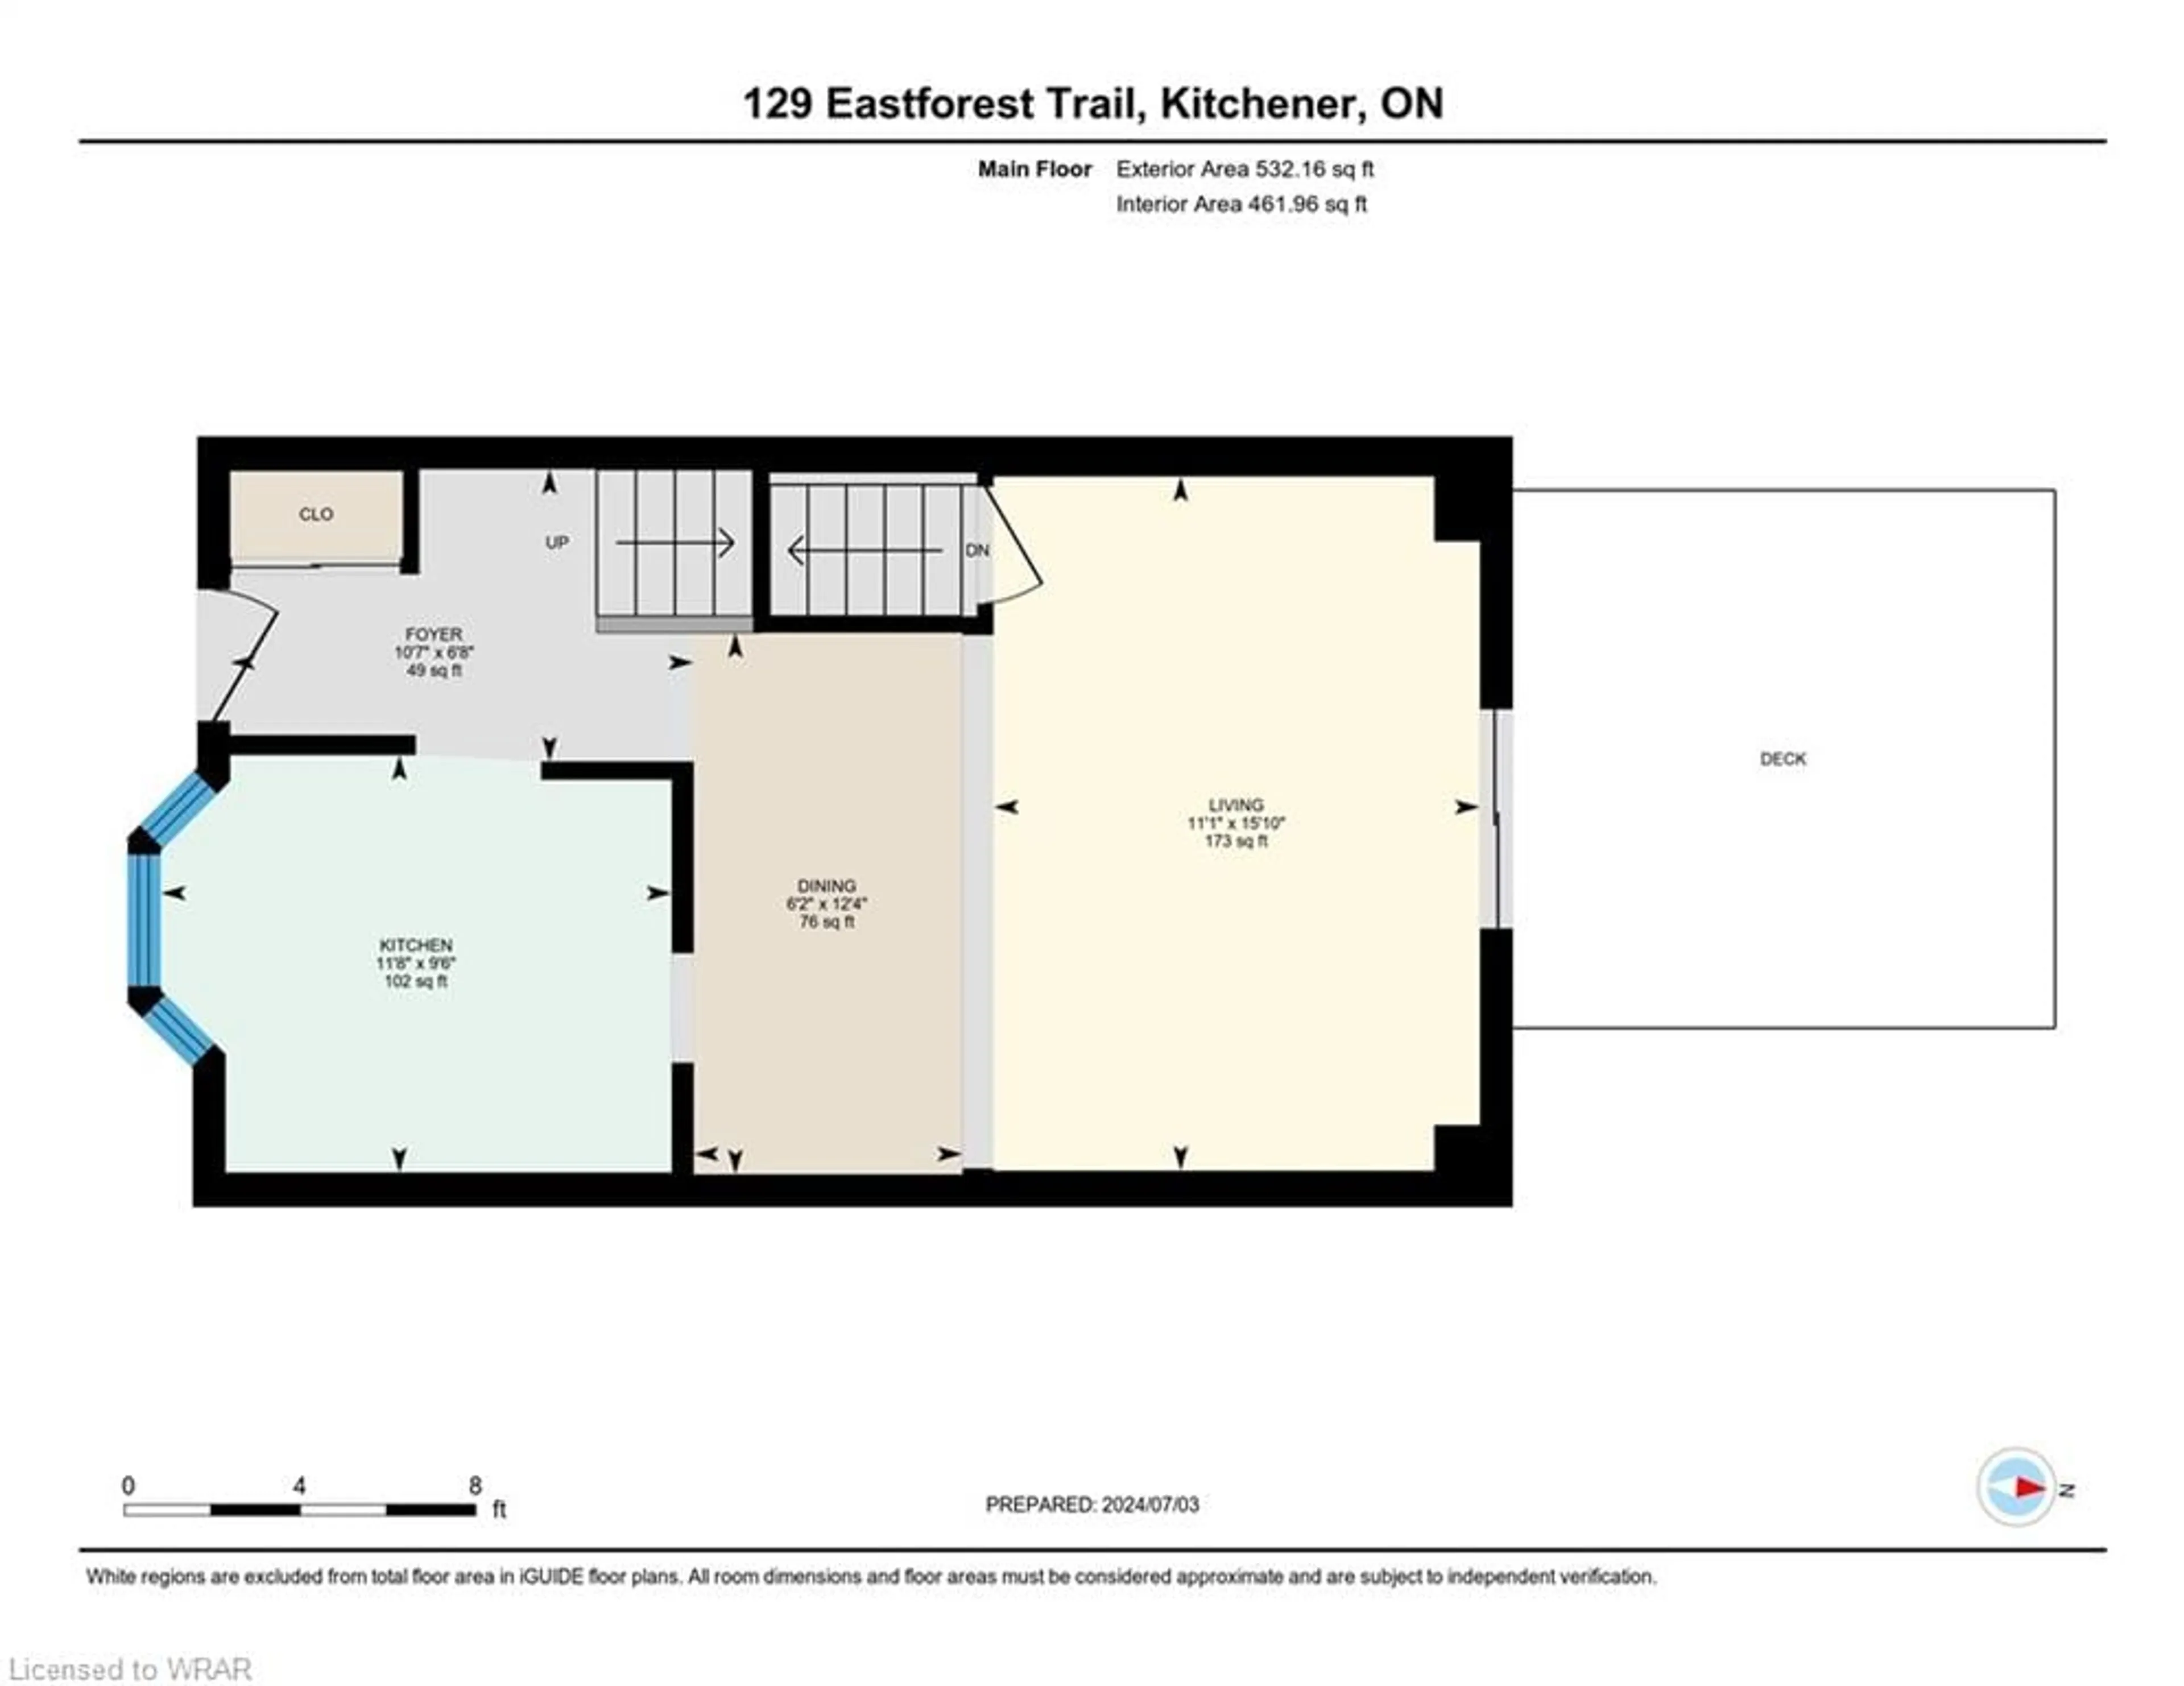 Floor plan for 129 Eastforest Trail, Kitchener Ontario N2N 3E4